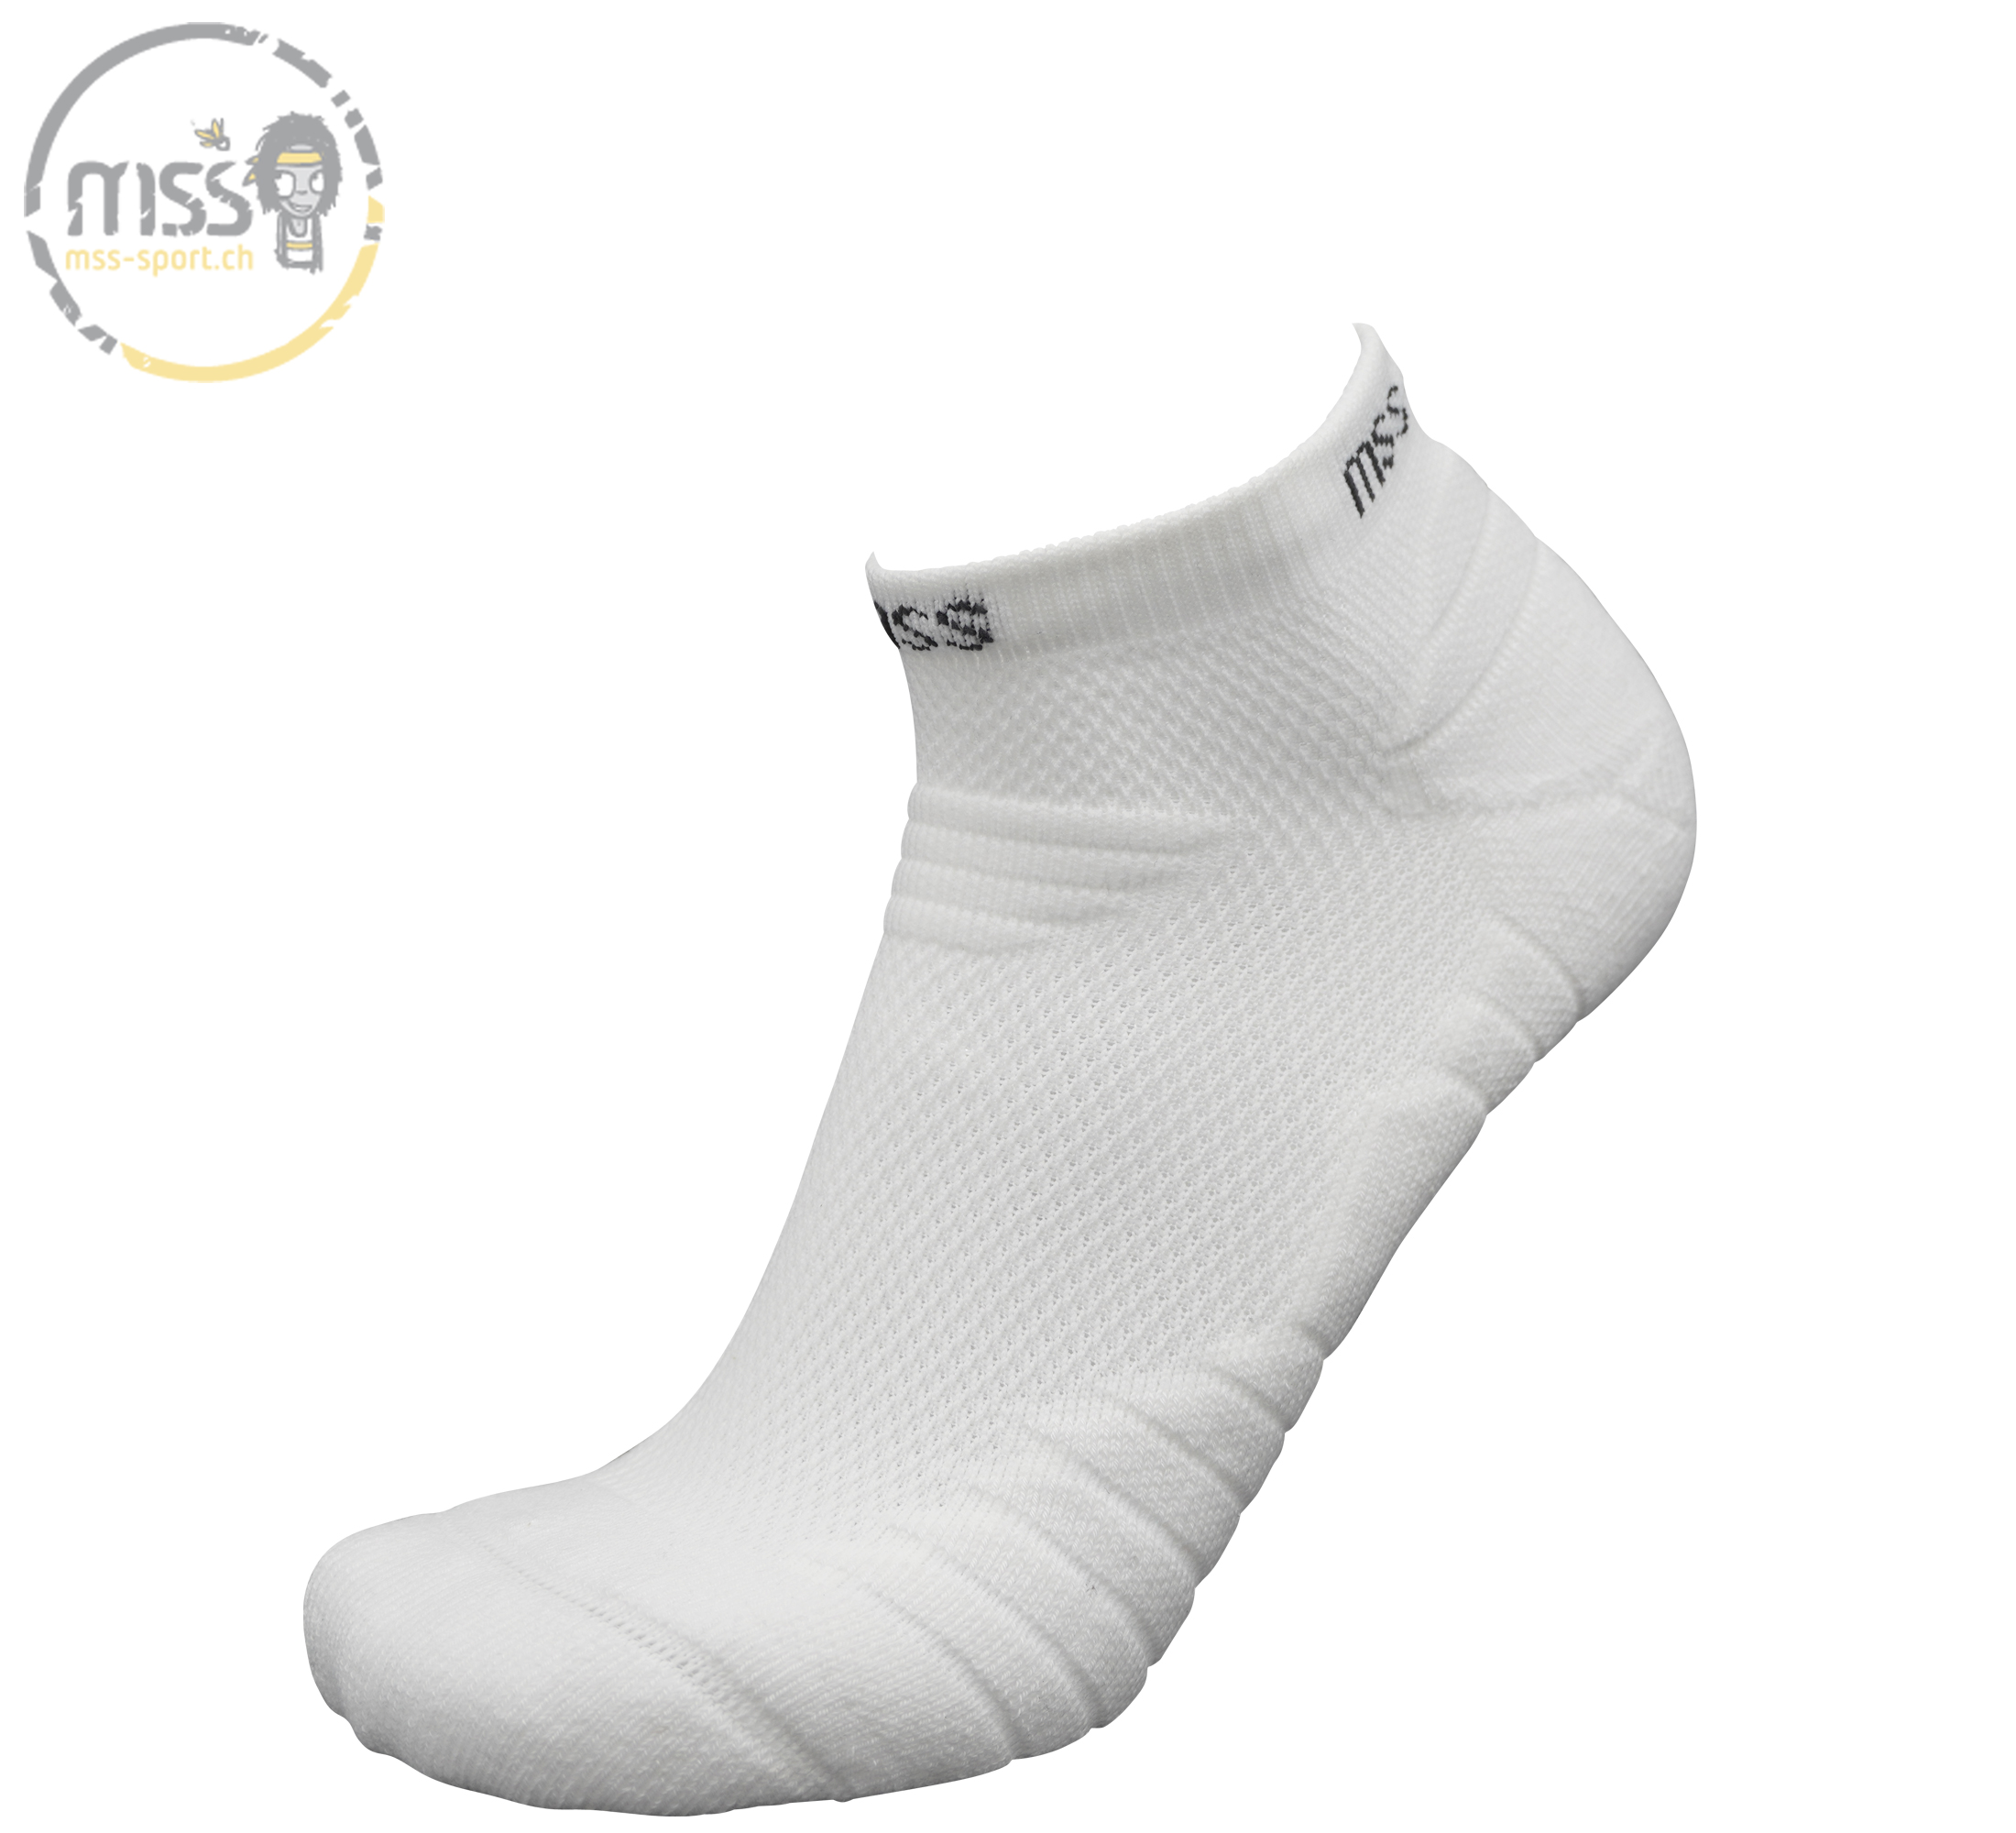 mss-socks Smash 5300 low Men white